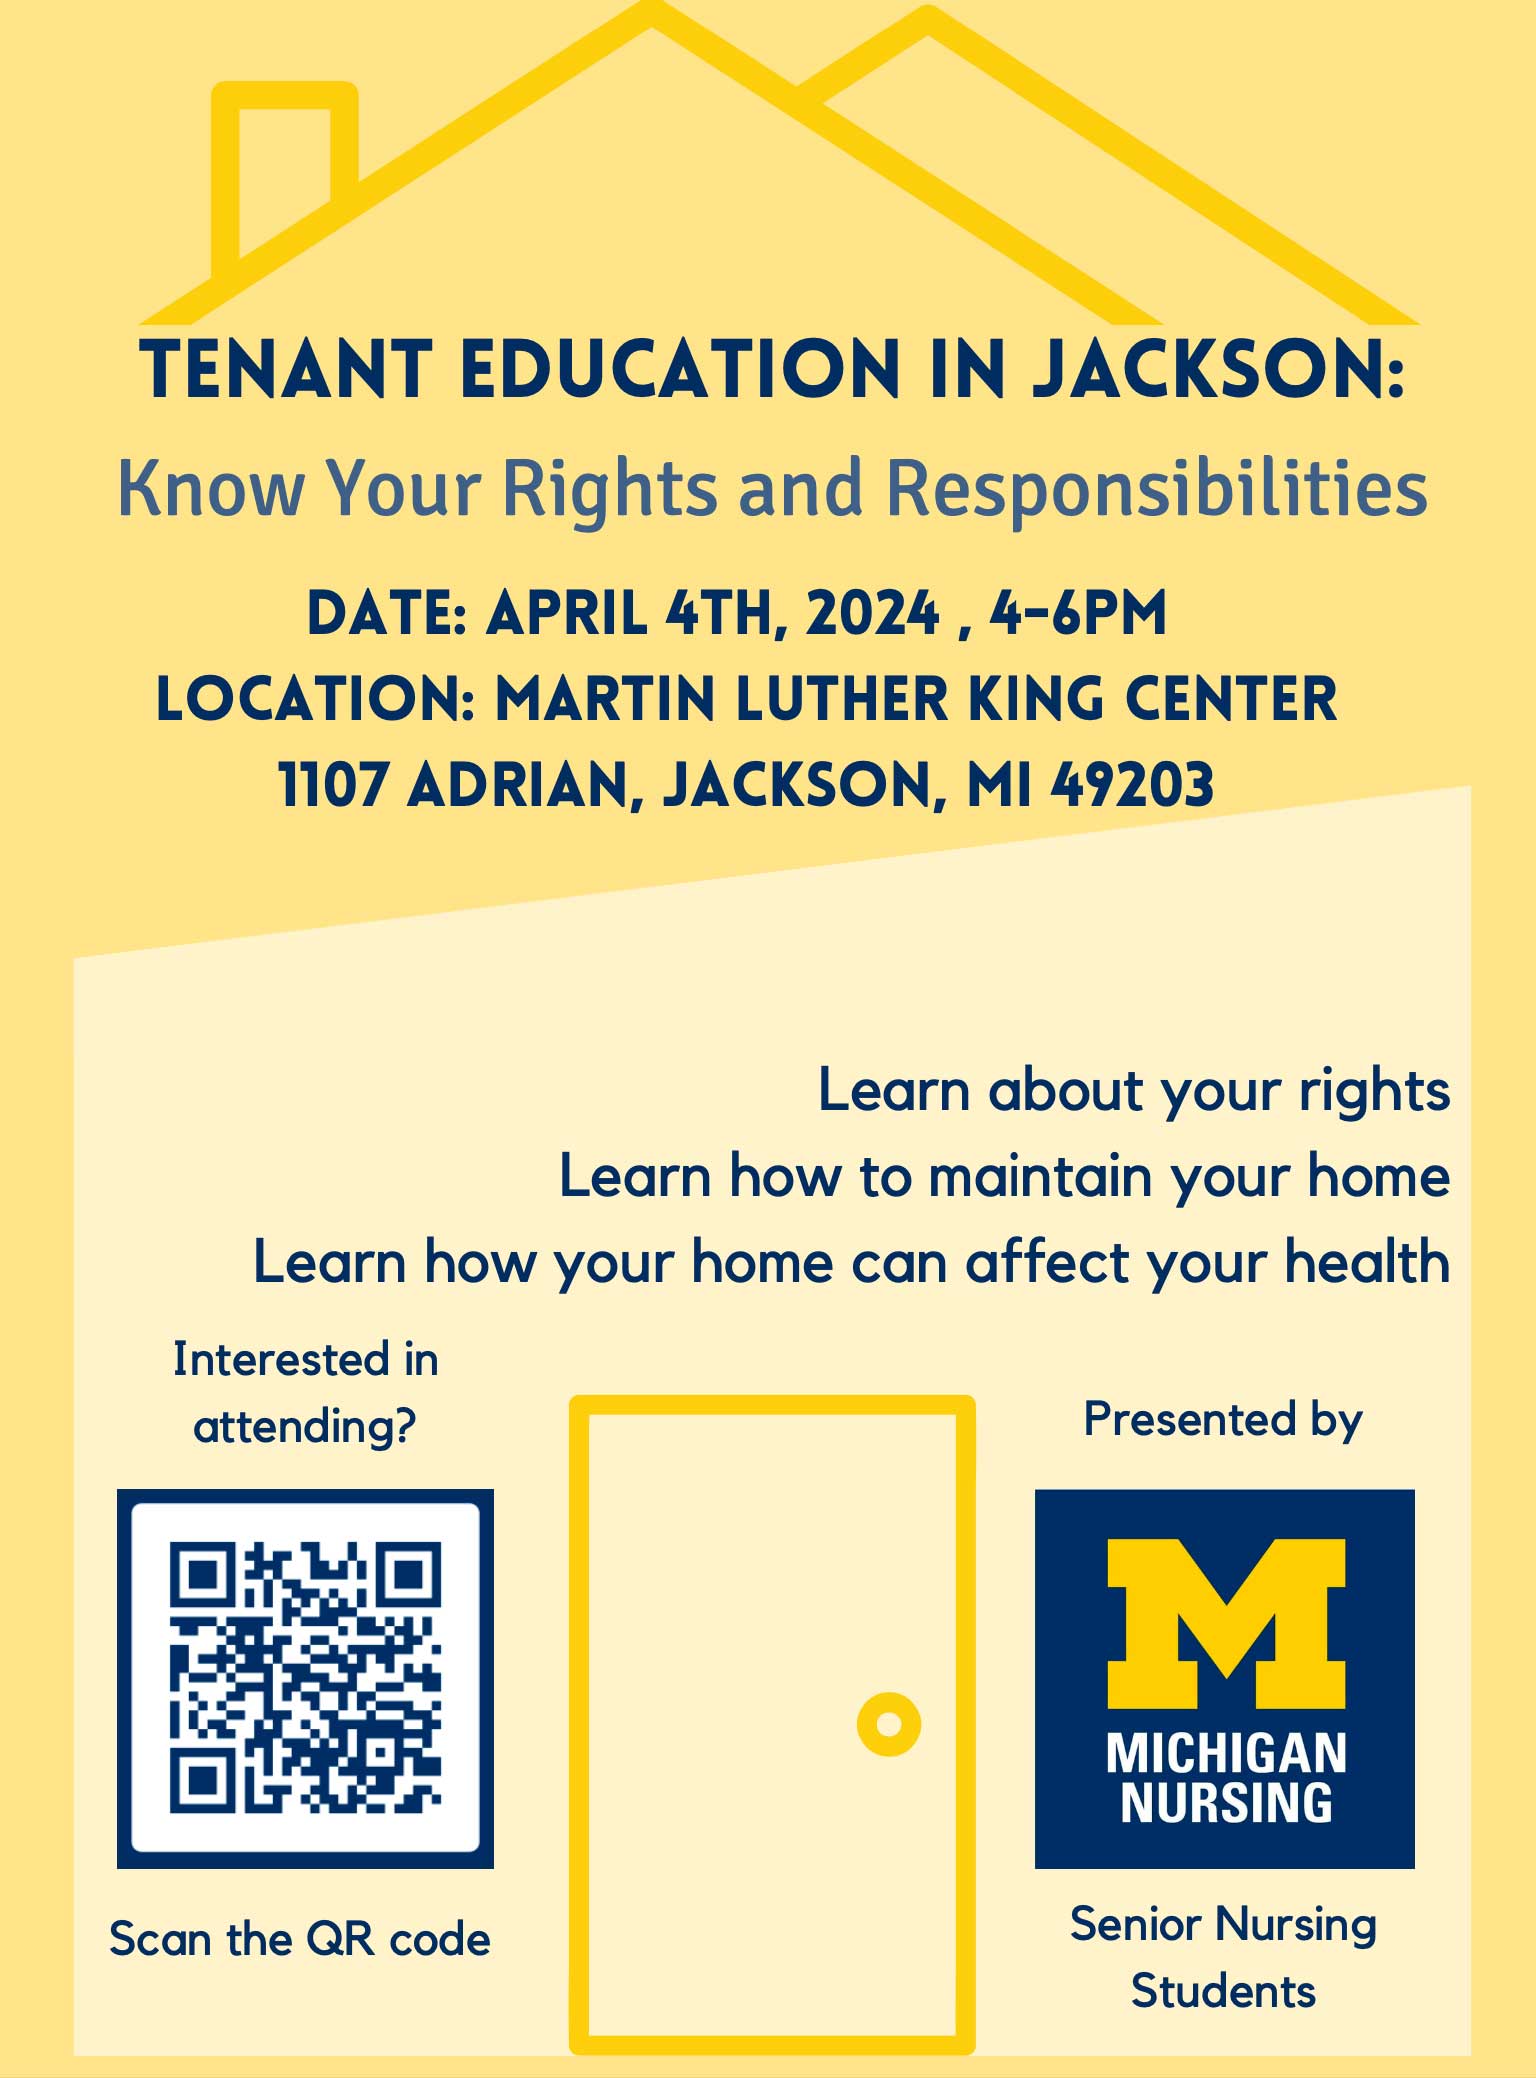 Tenant Education Event for Jackson Residents Happening Thursday, April 4